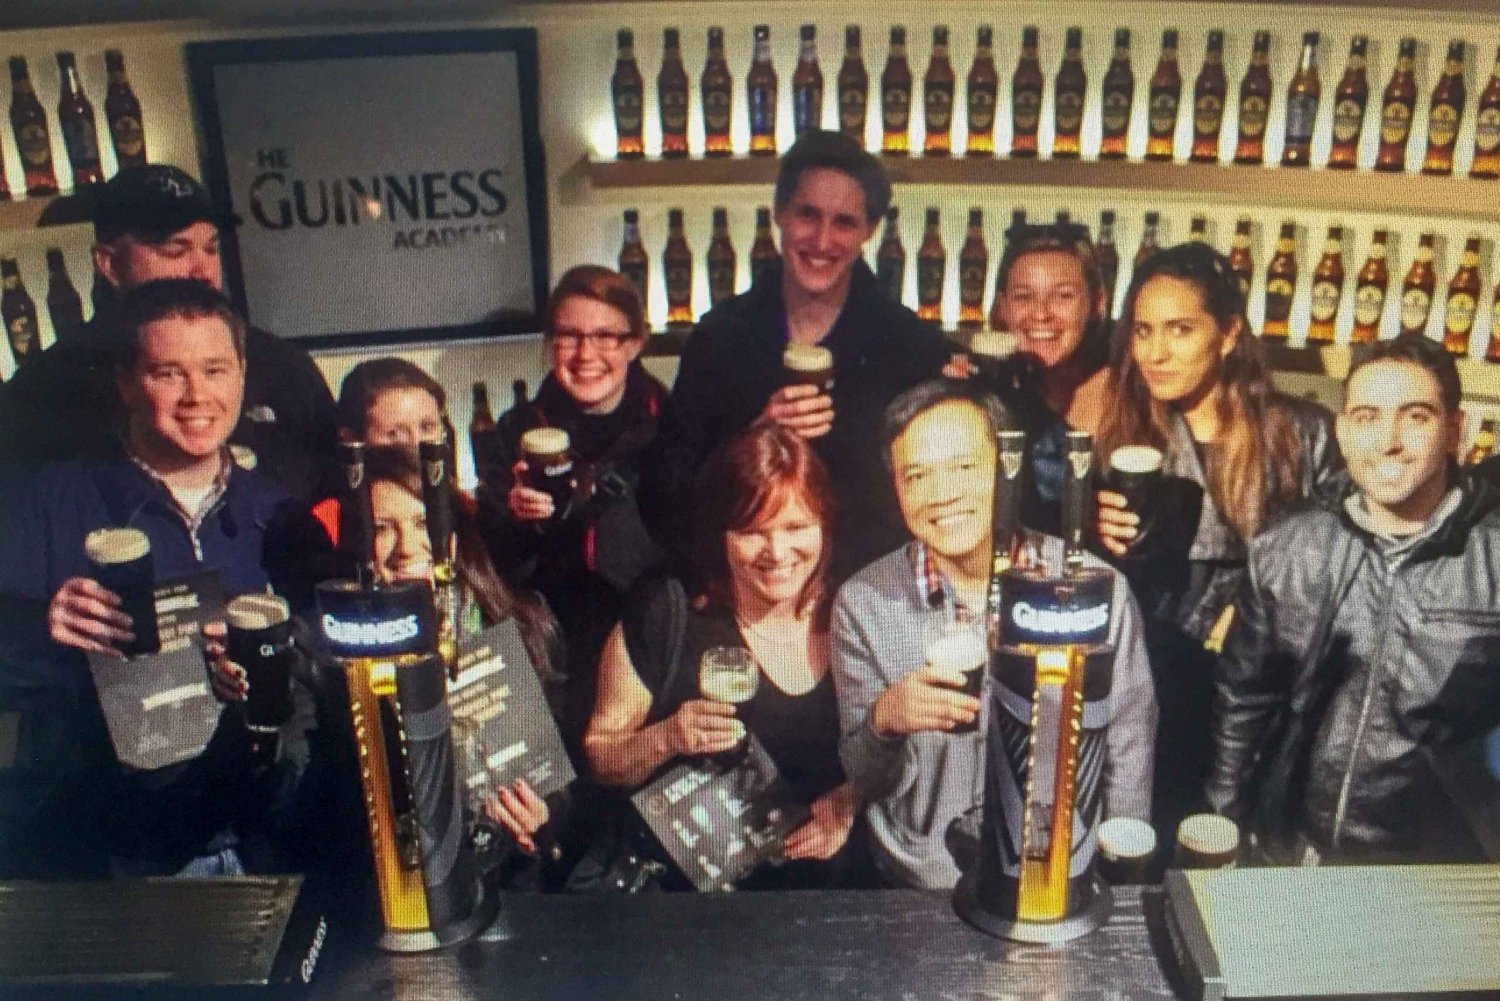 Skip-the-Line: Guinness & Jameson Irish Experience Tour